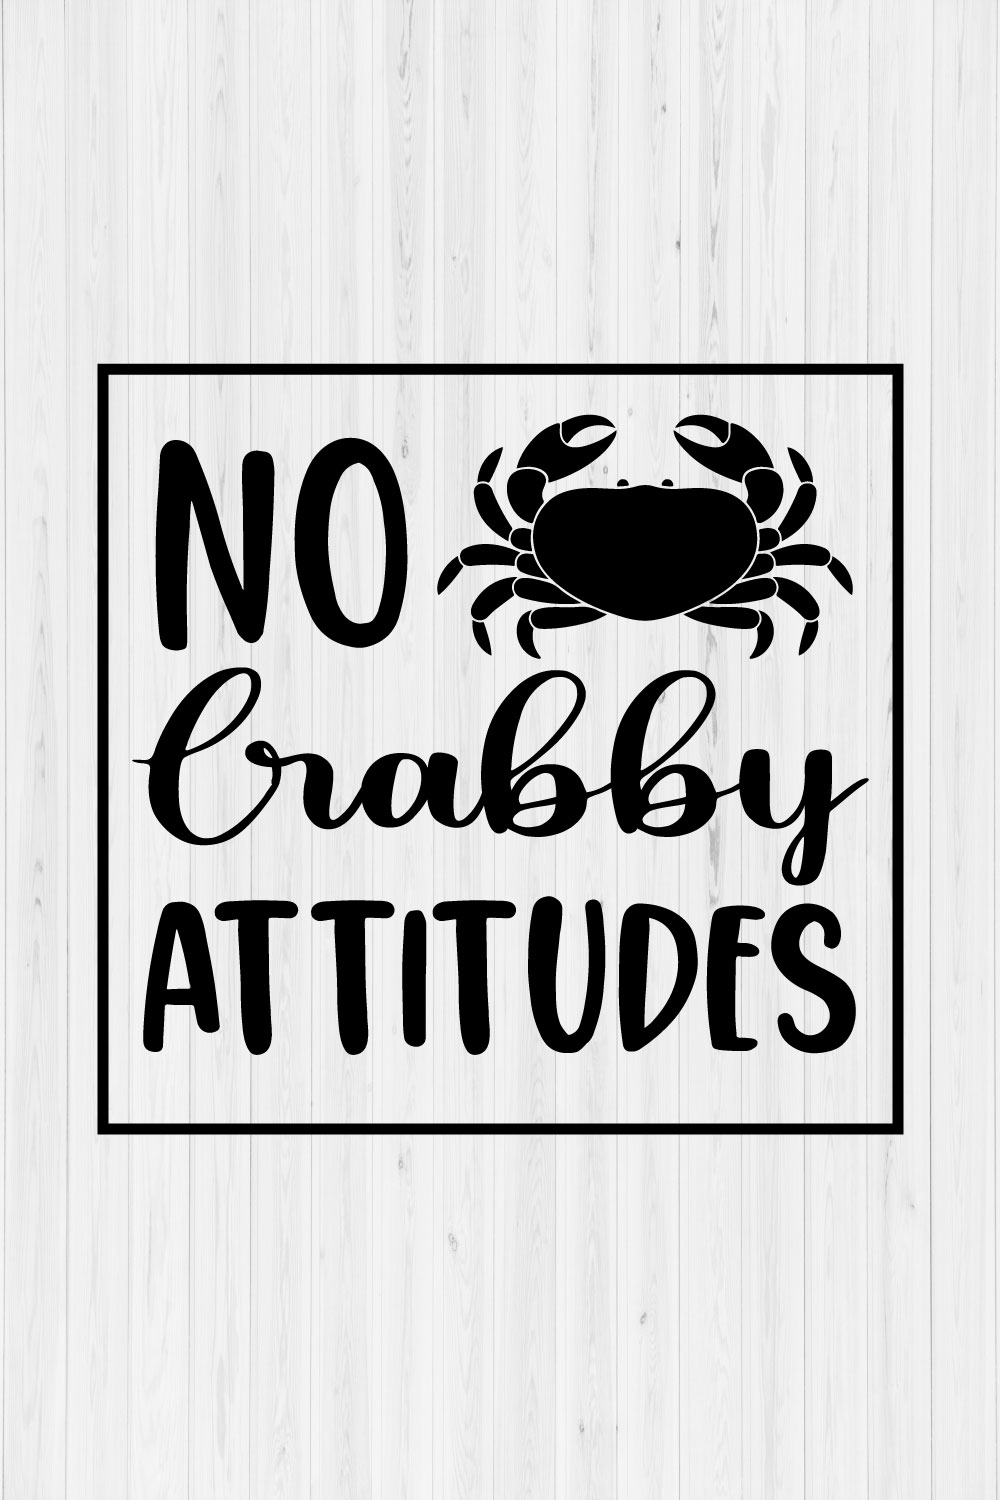 No Crabby Attitudes pinterest preview image.